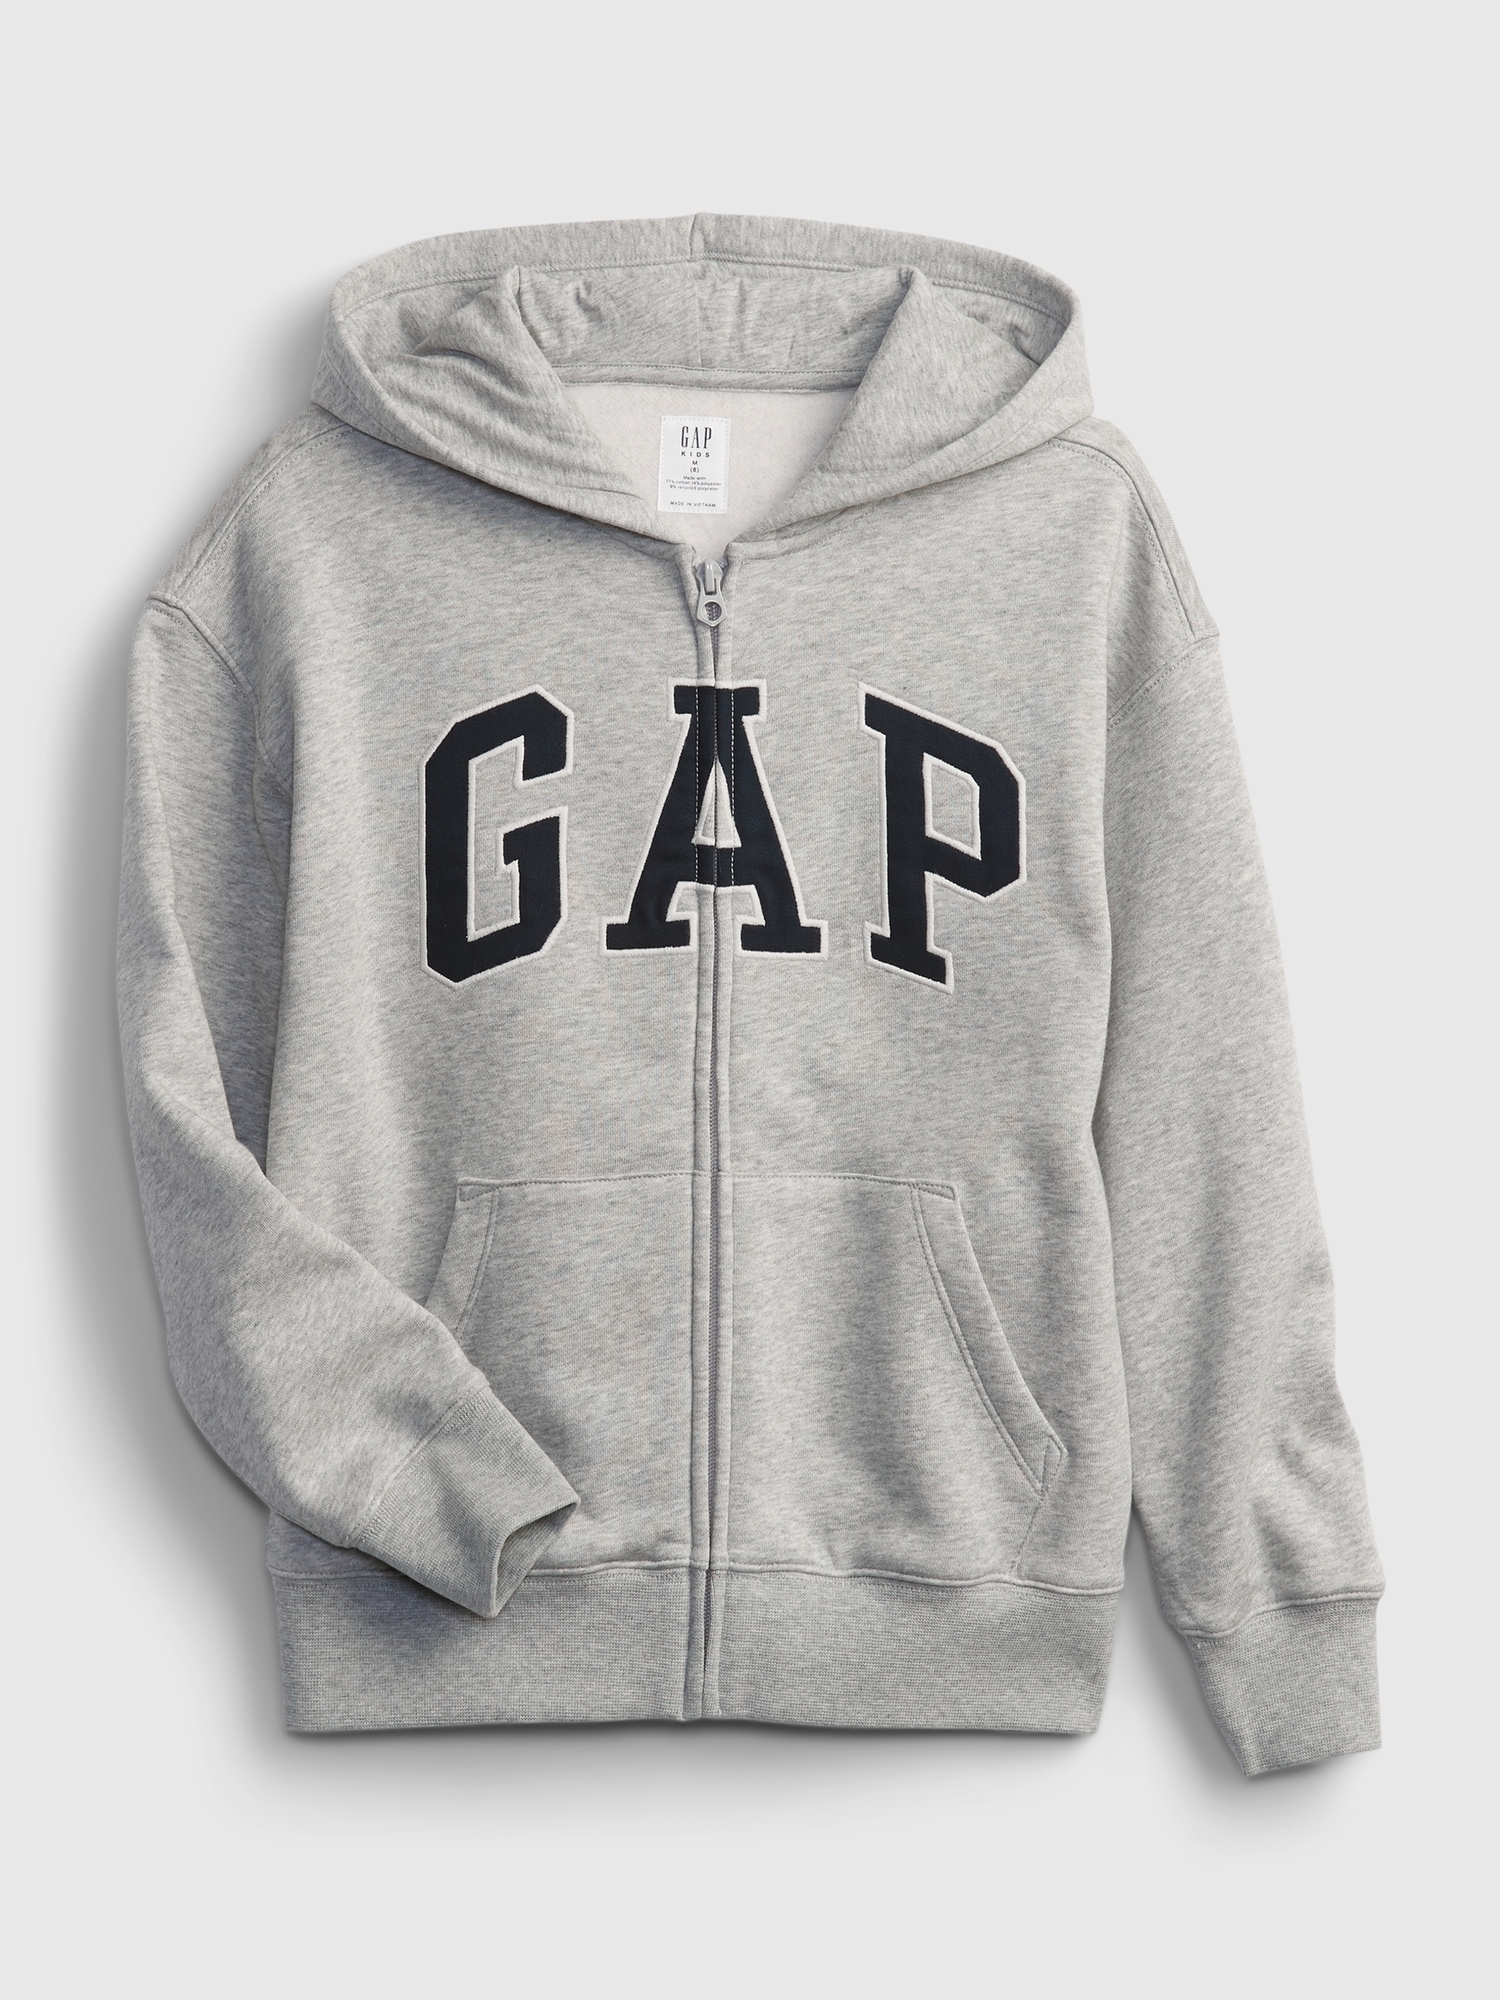 Gap Mens Black Full Zip Up Jacket Size L RN 54023